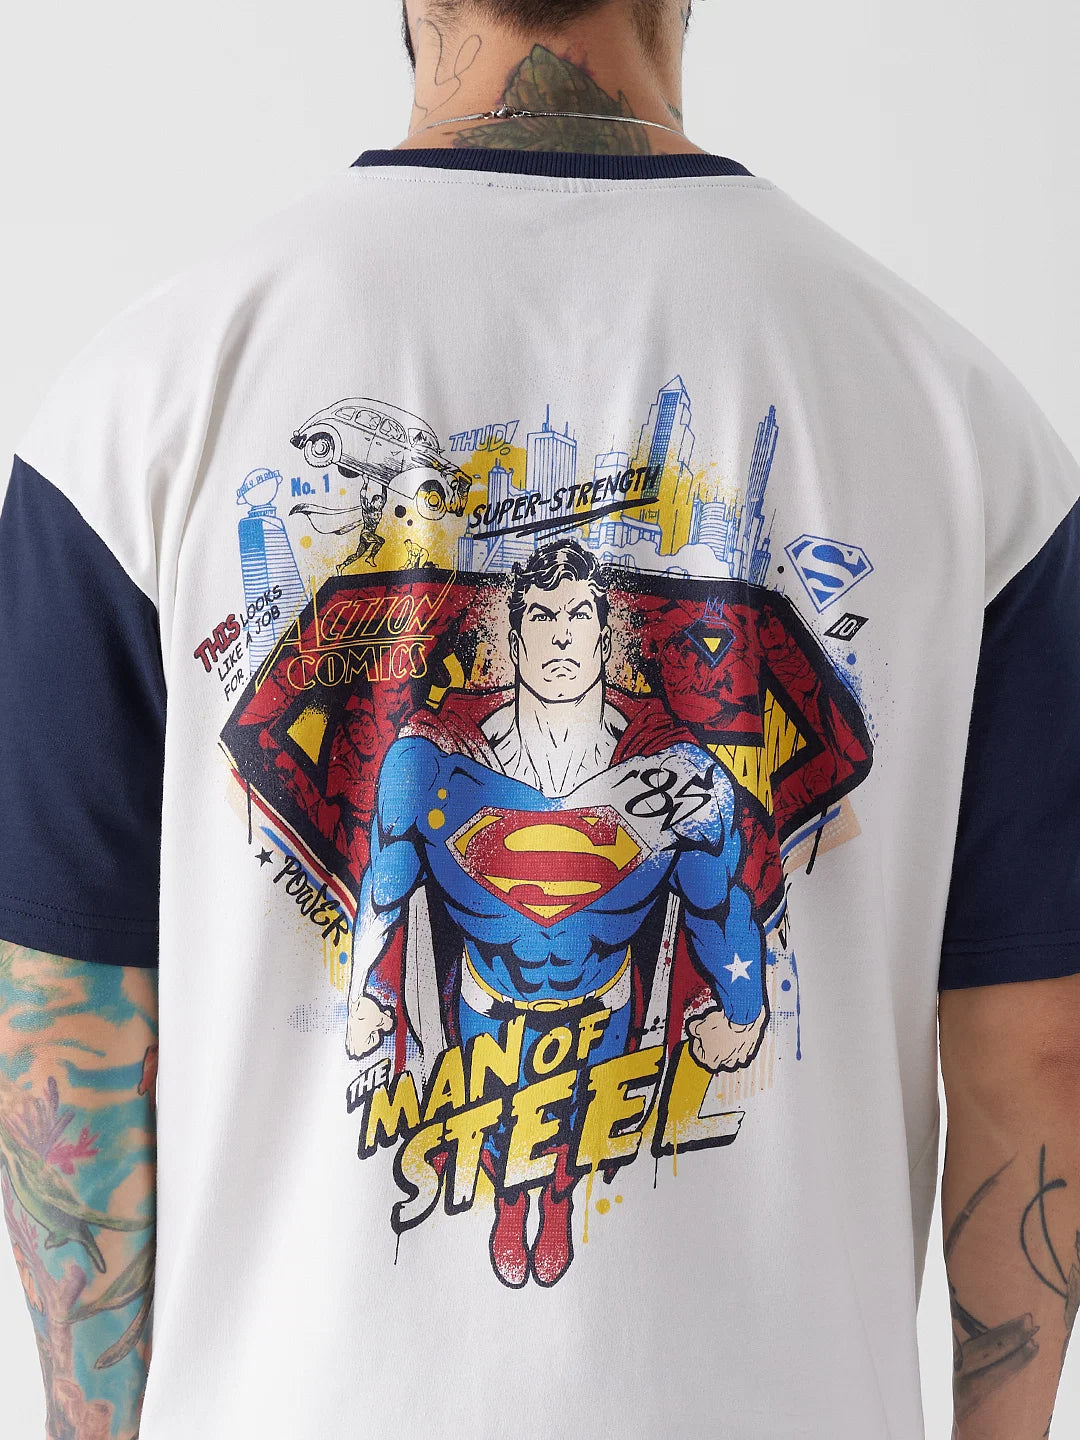 Superman The Man of Steel (UK version)